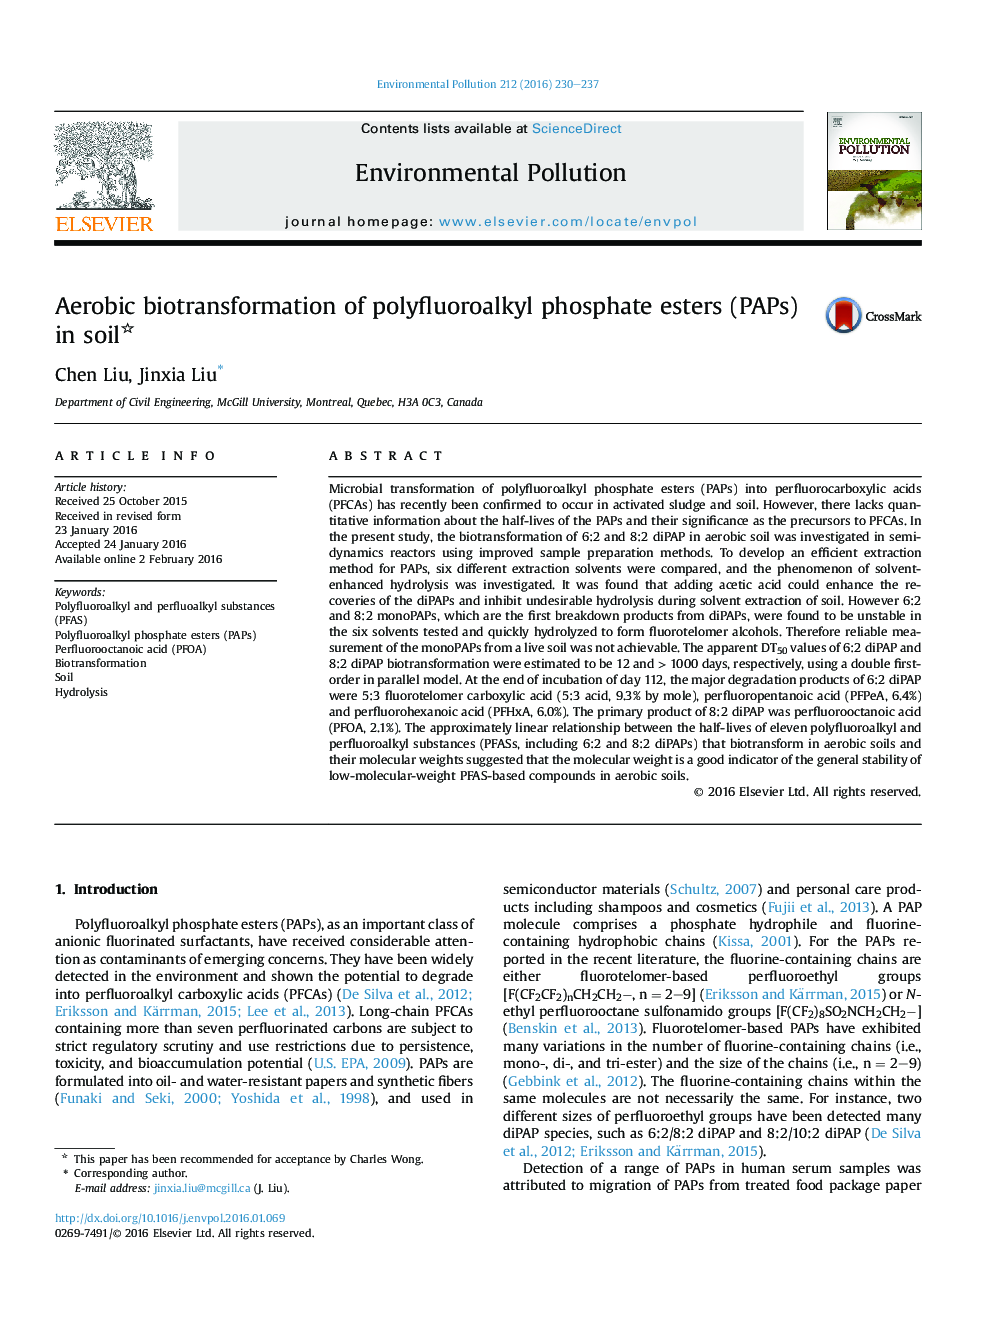 Aerobic biotransformation of polyfluoroalkyl phosphate esters (PAPs) in soil